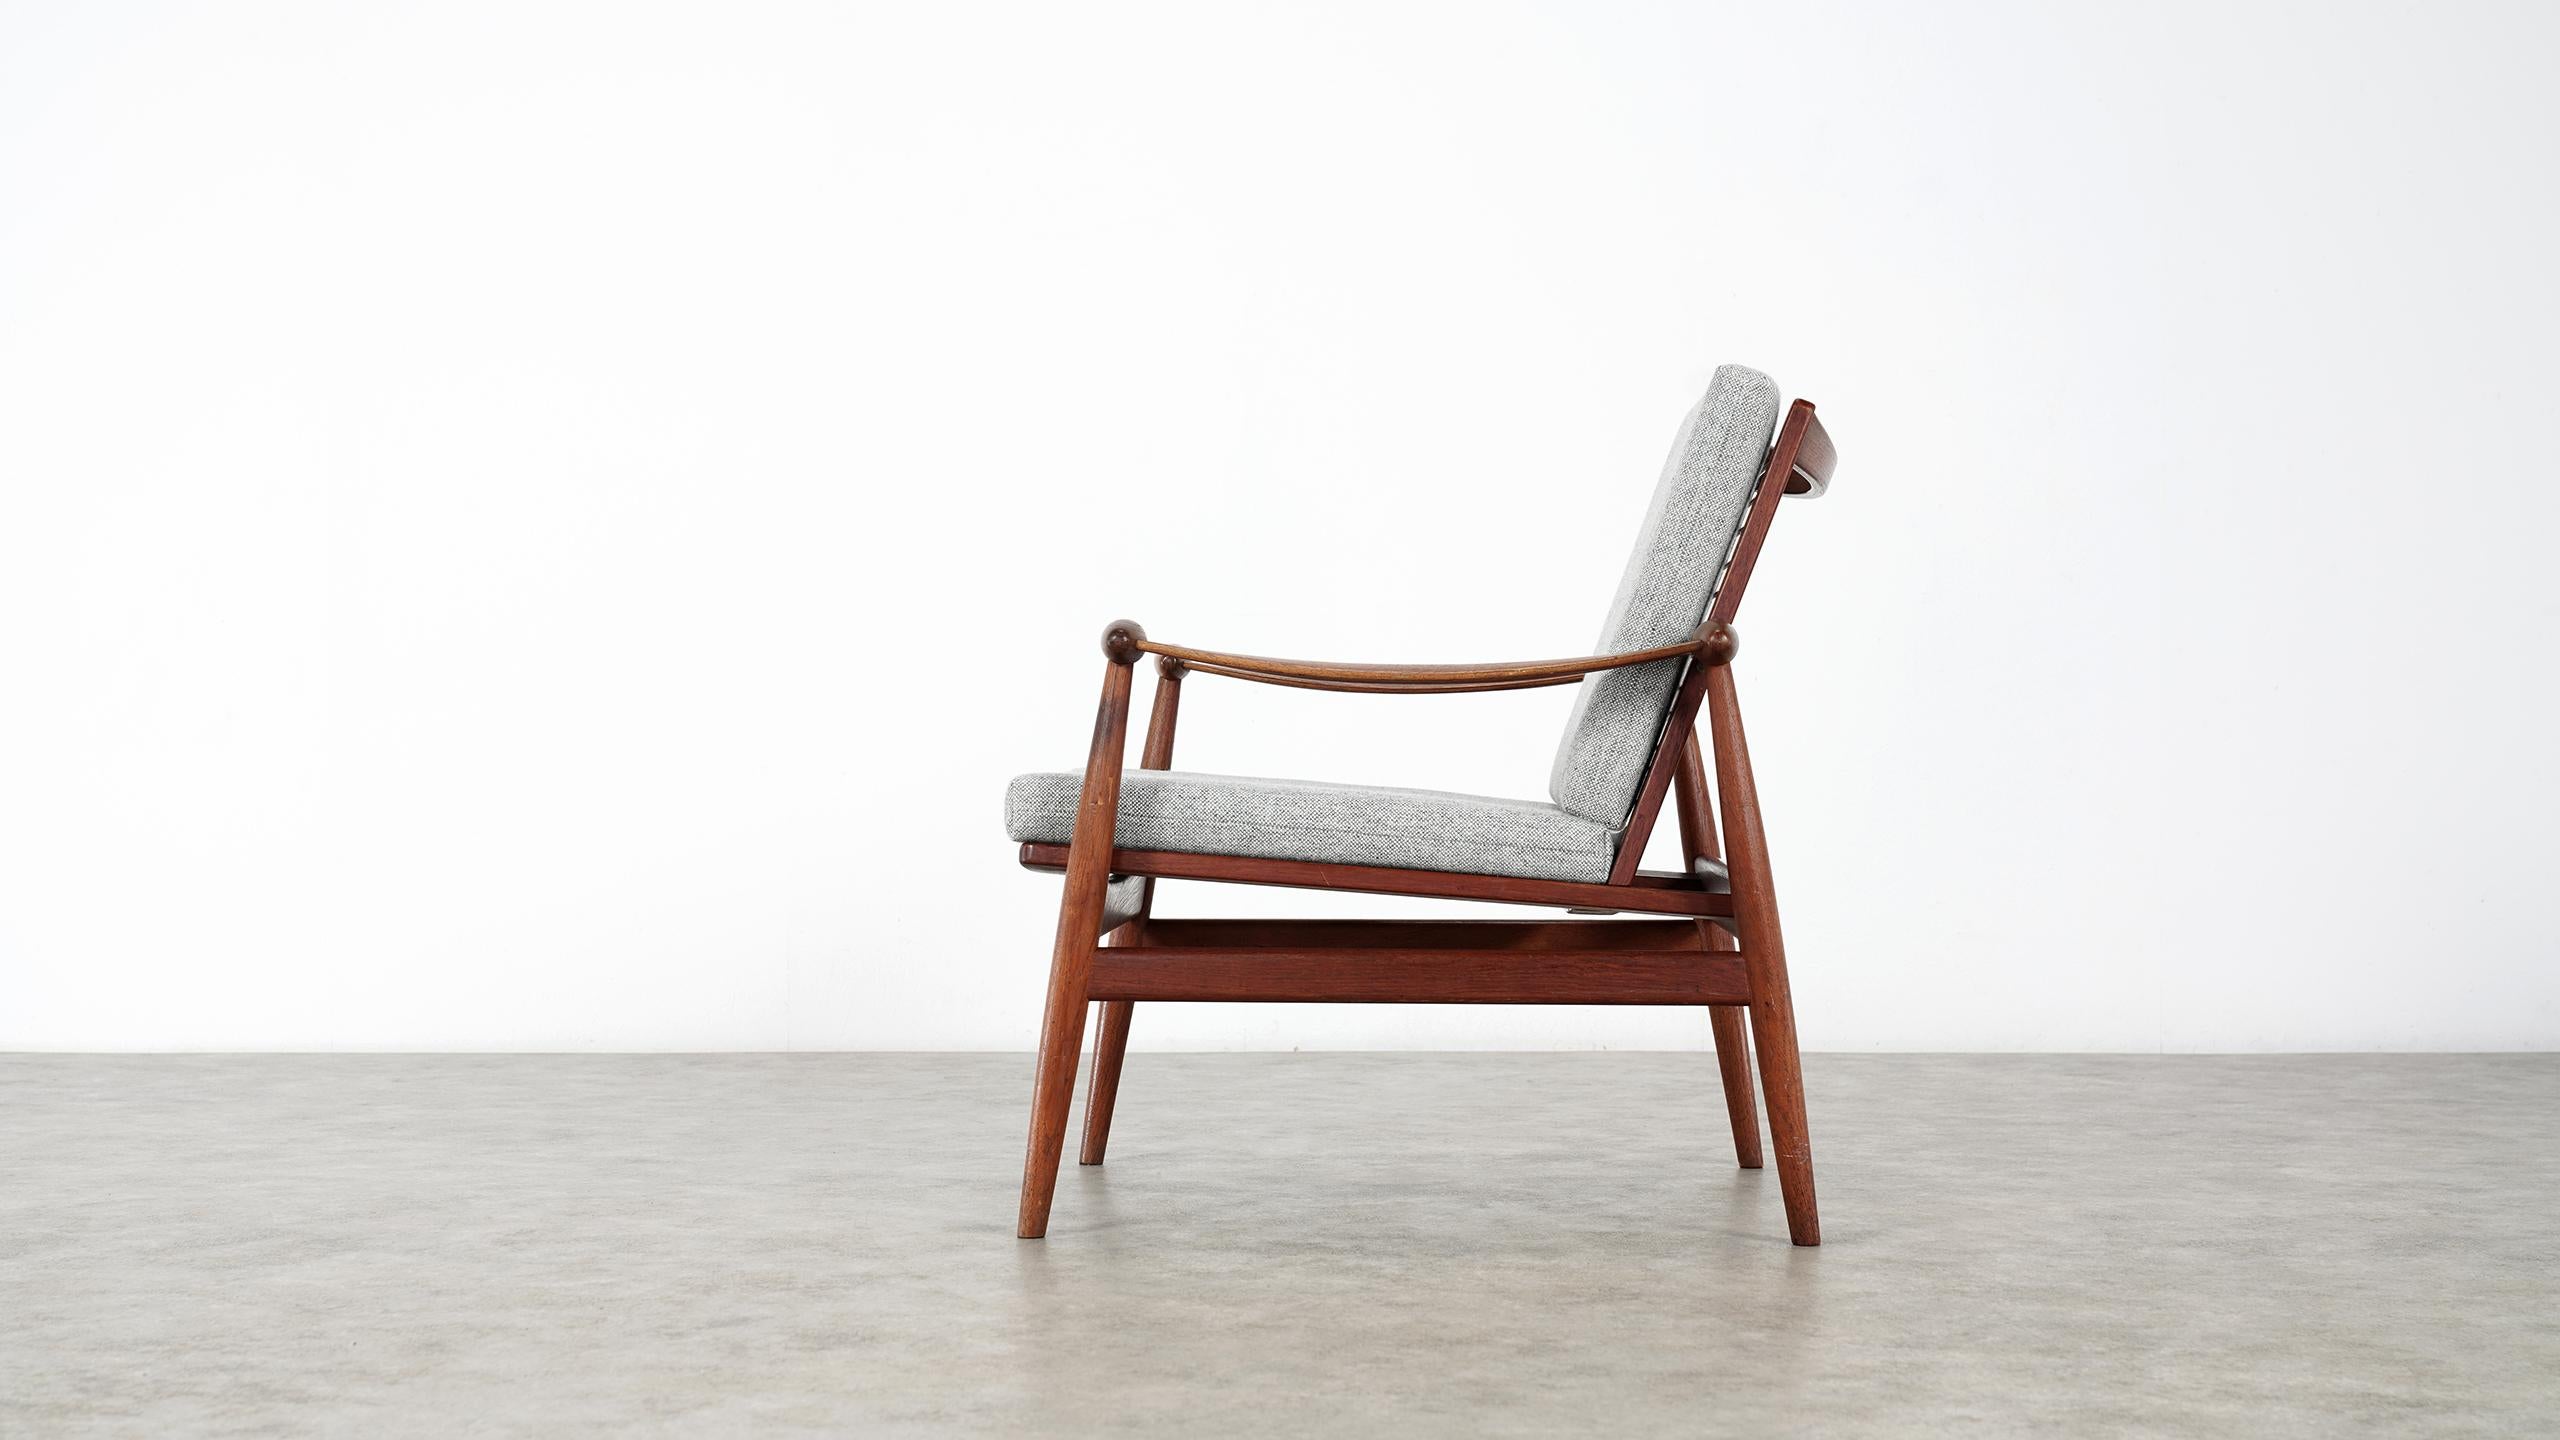 Mid-20th Century Finn Juhl, Spade Teak Lounge Chair, 1953 by France & Daverkosen, Denmark